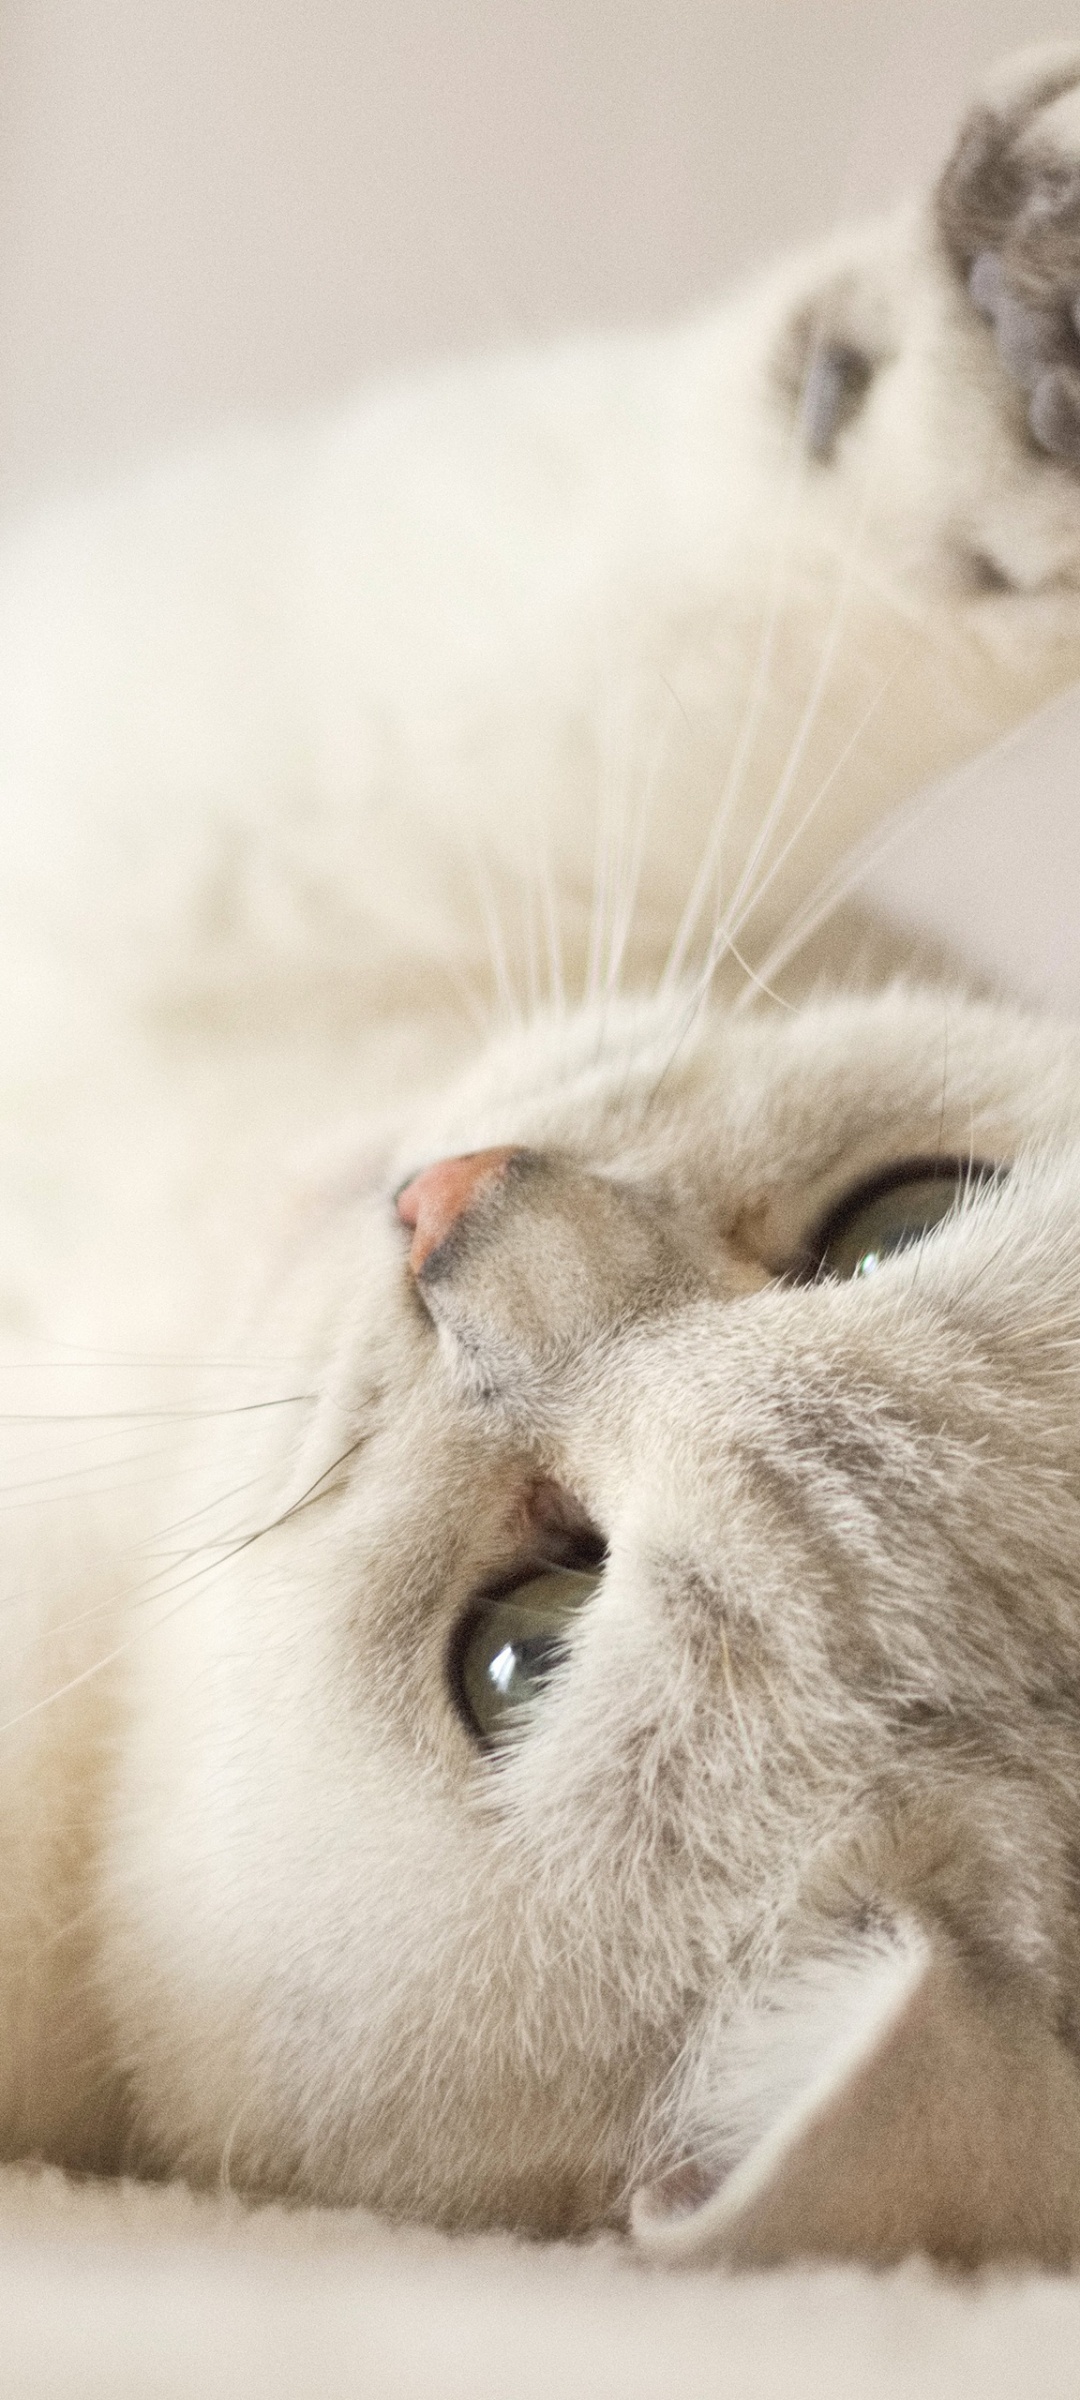 Cute Cat IPhone Wallpaper 87 images